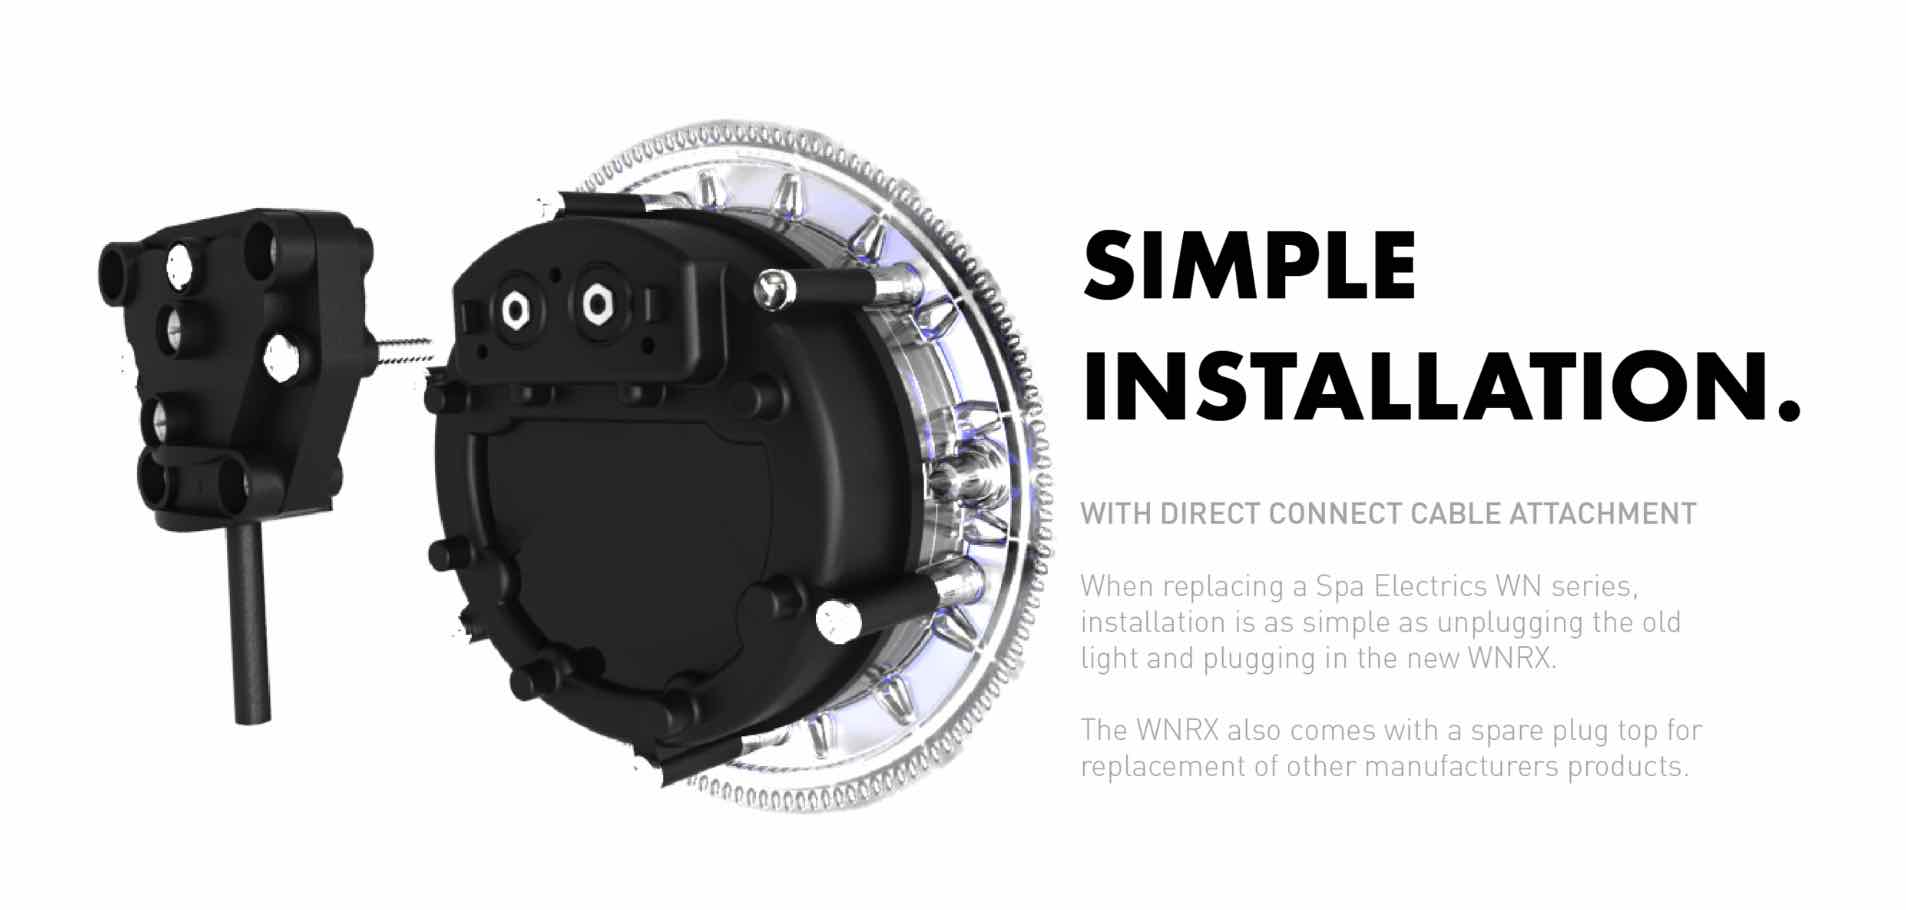 Spa Electrics WNRX Simple Installation